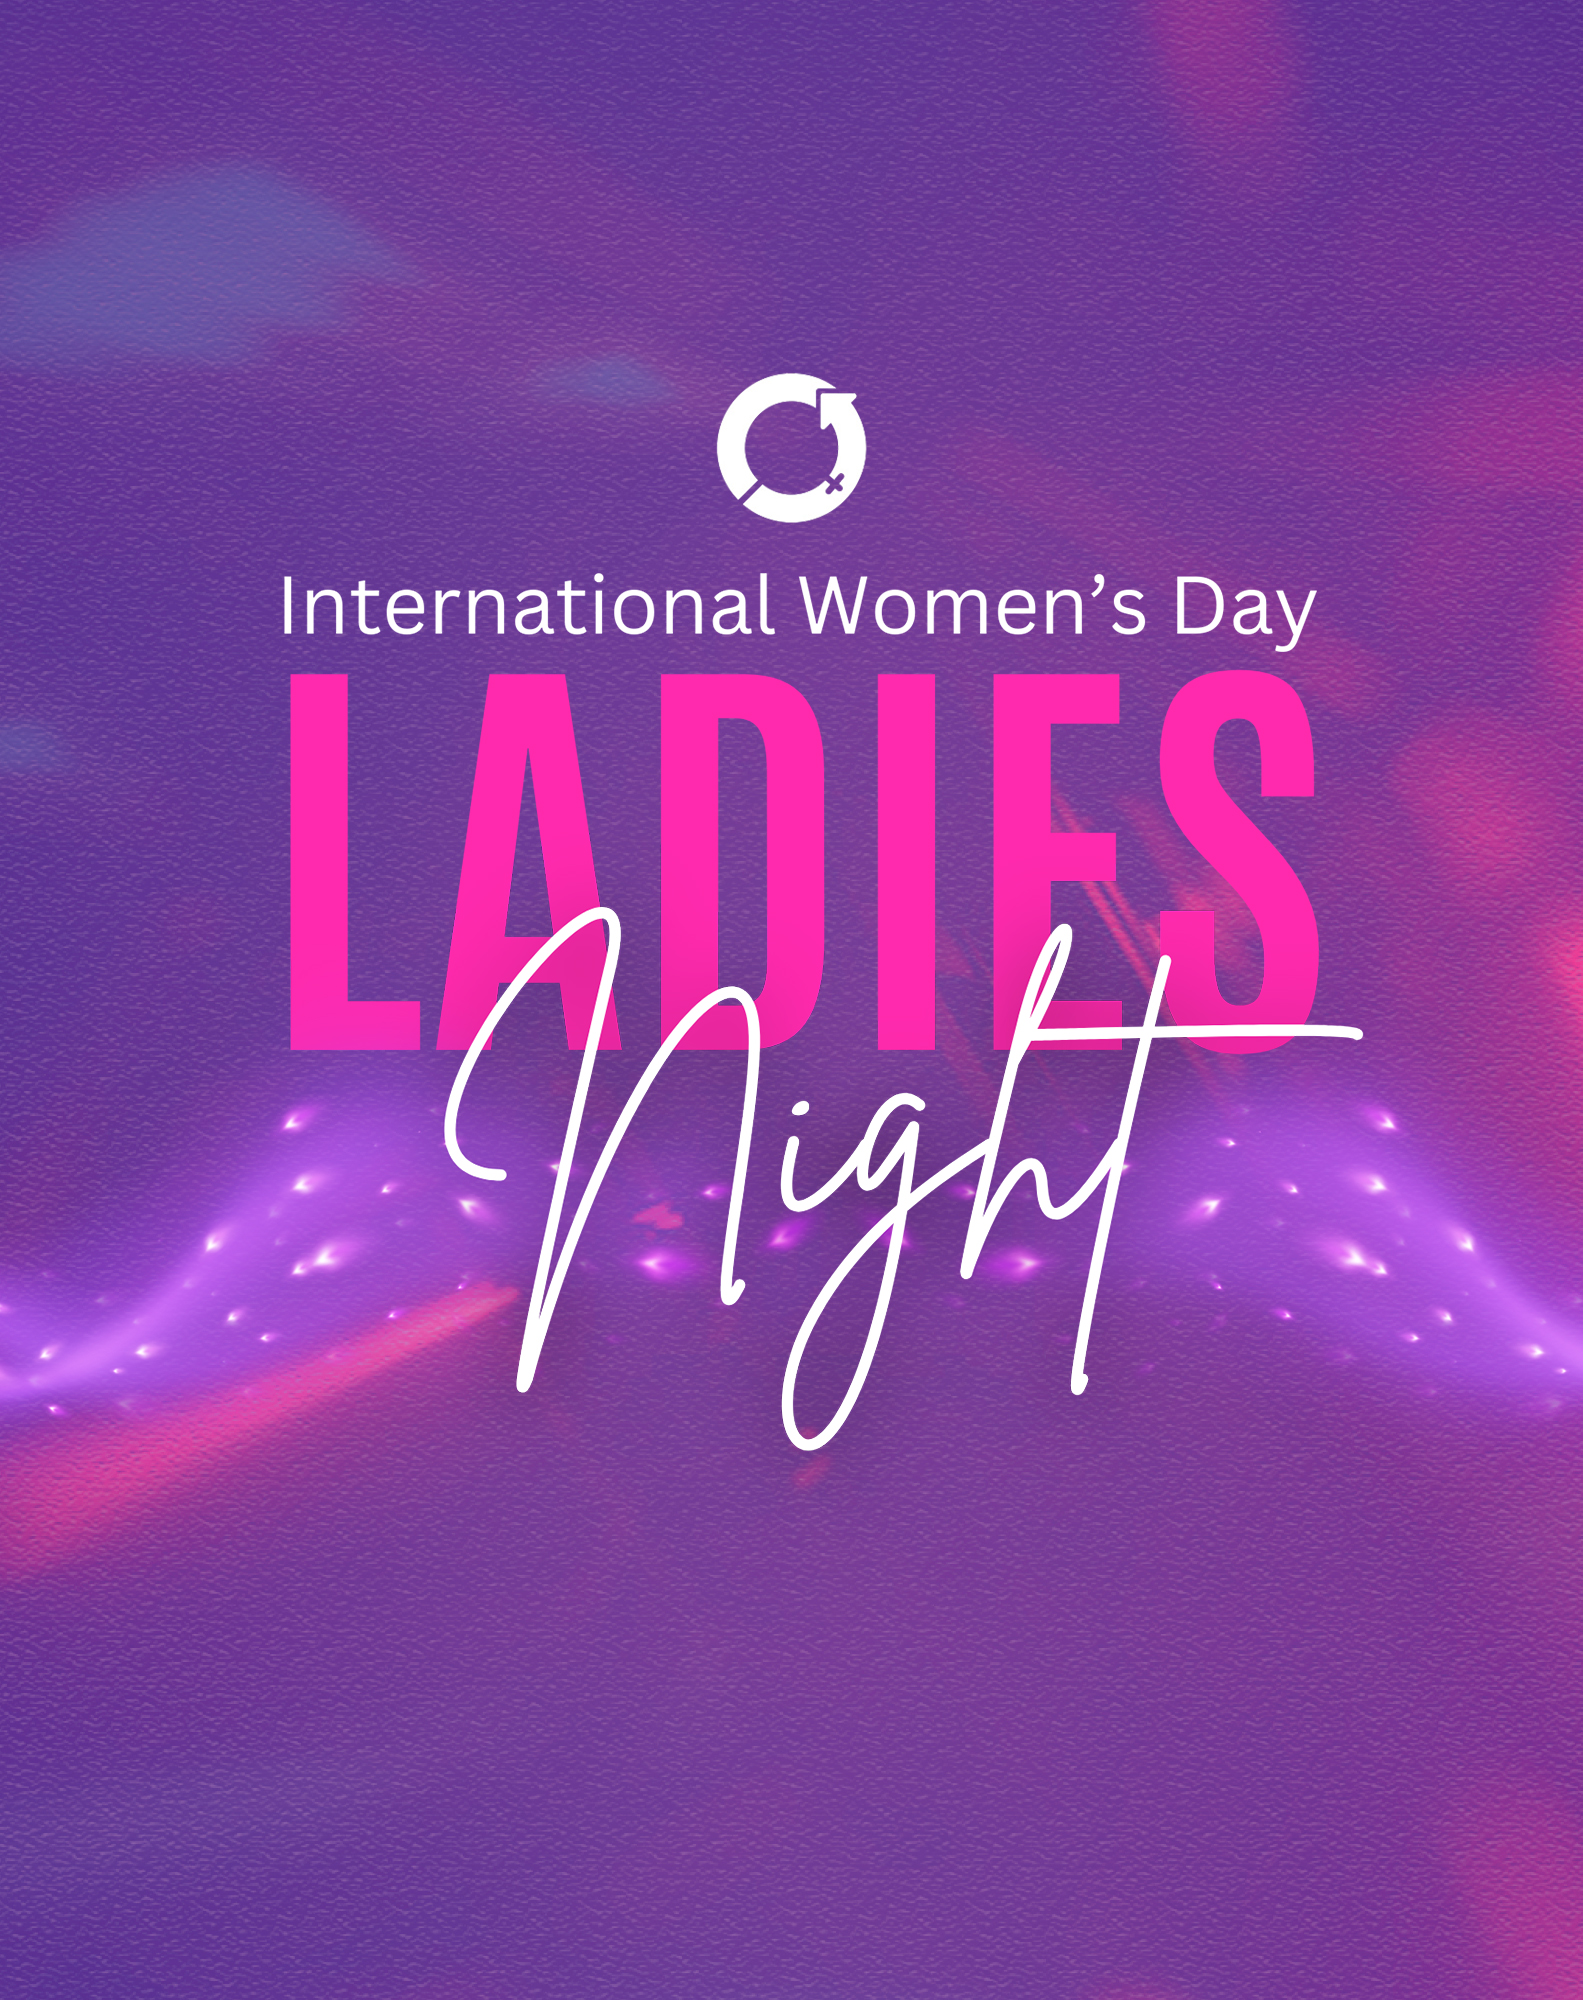 International Womens Day “LADIES’ NIGHT”